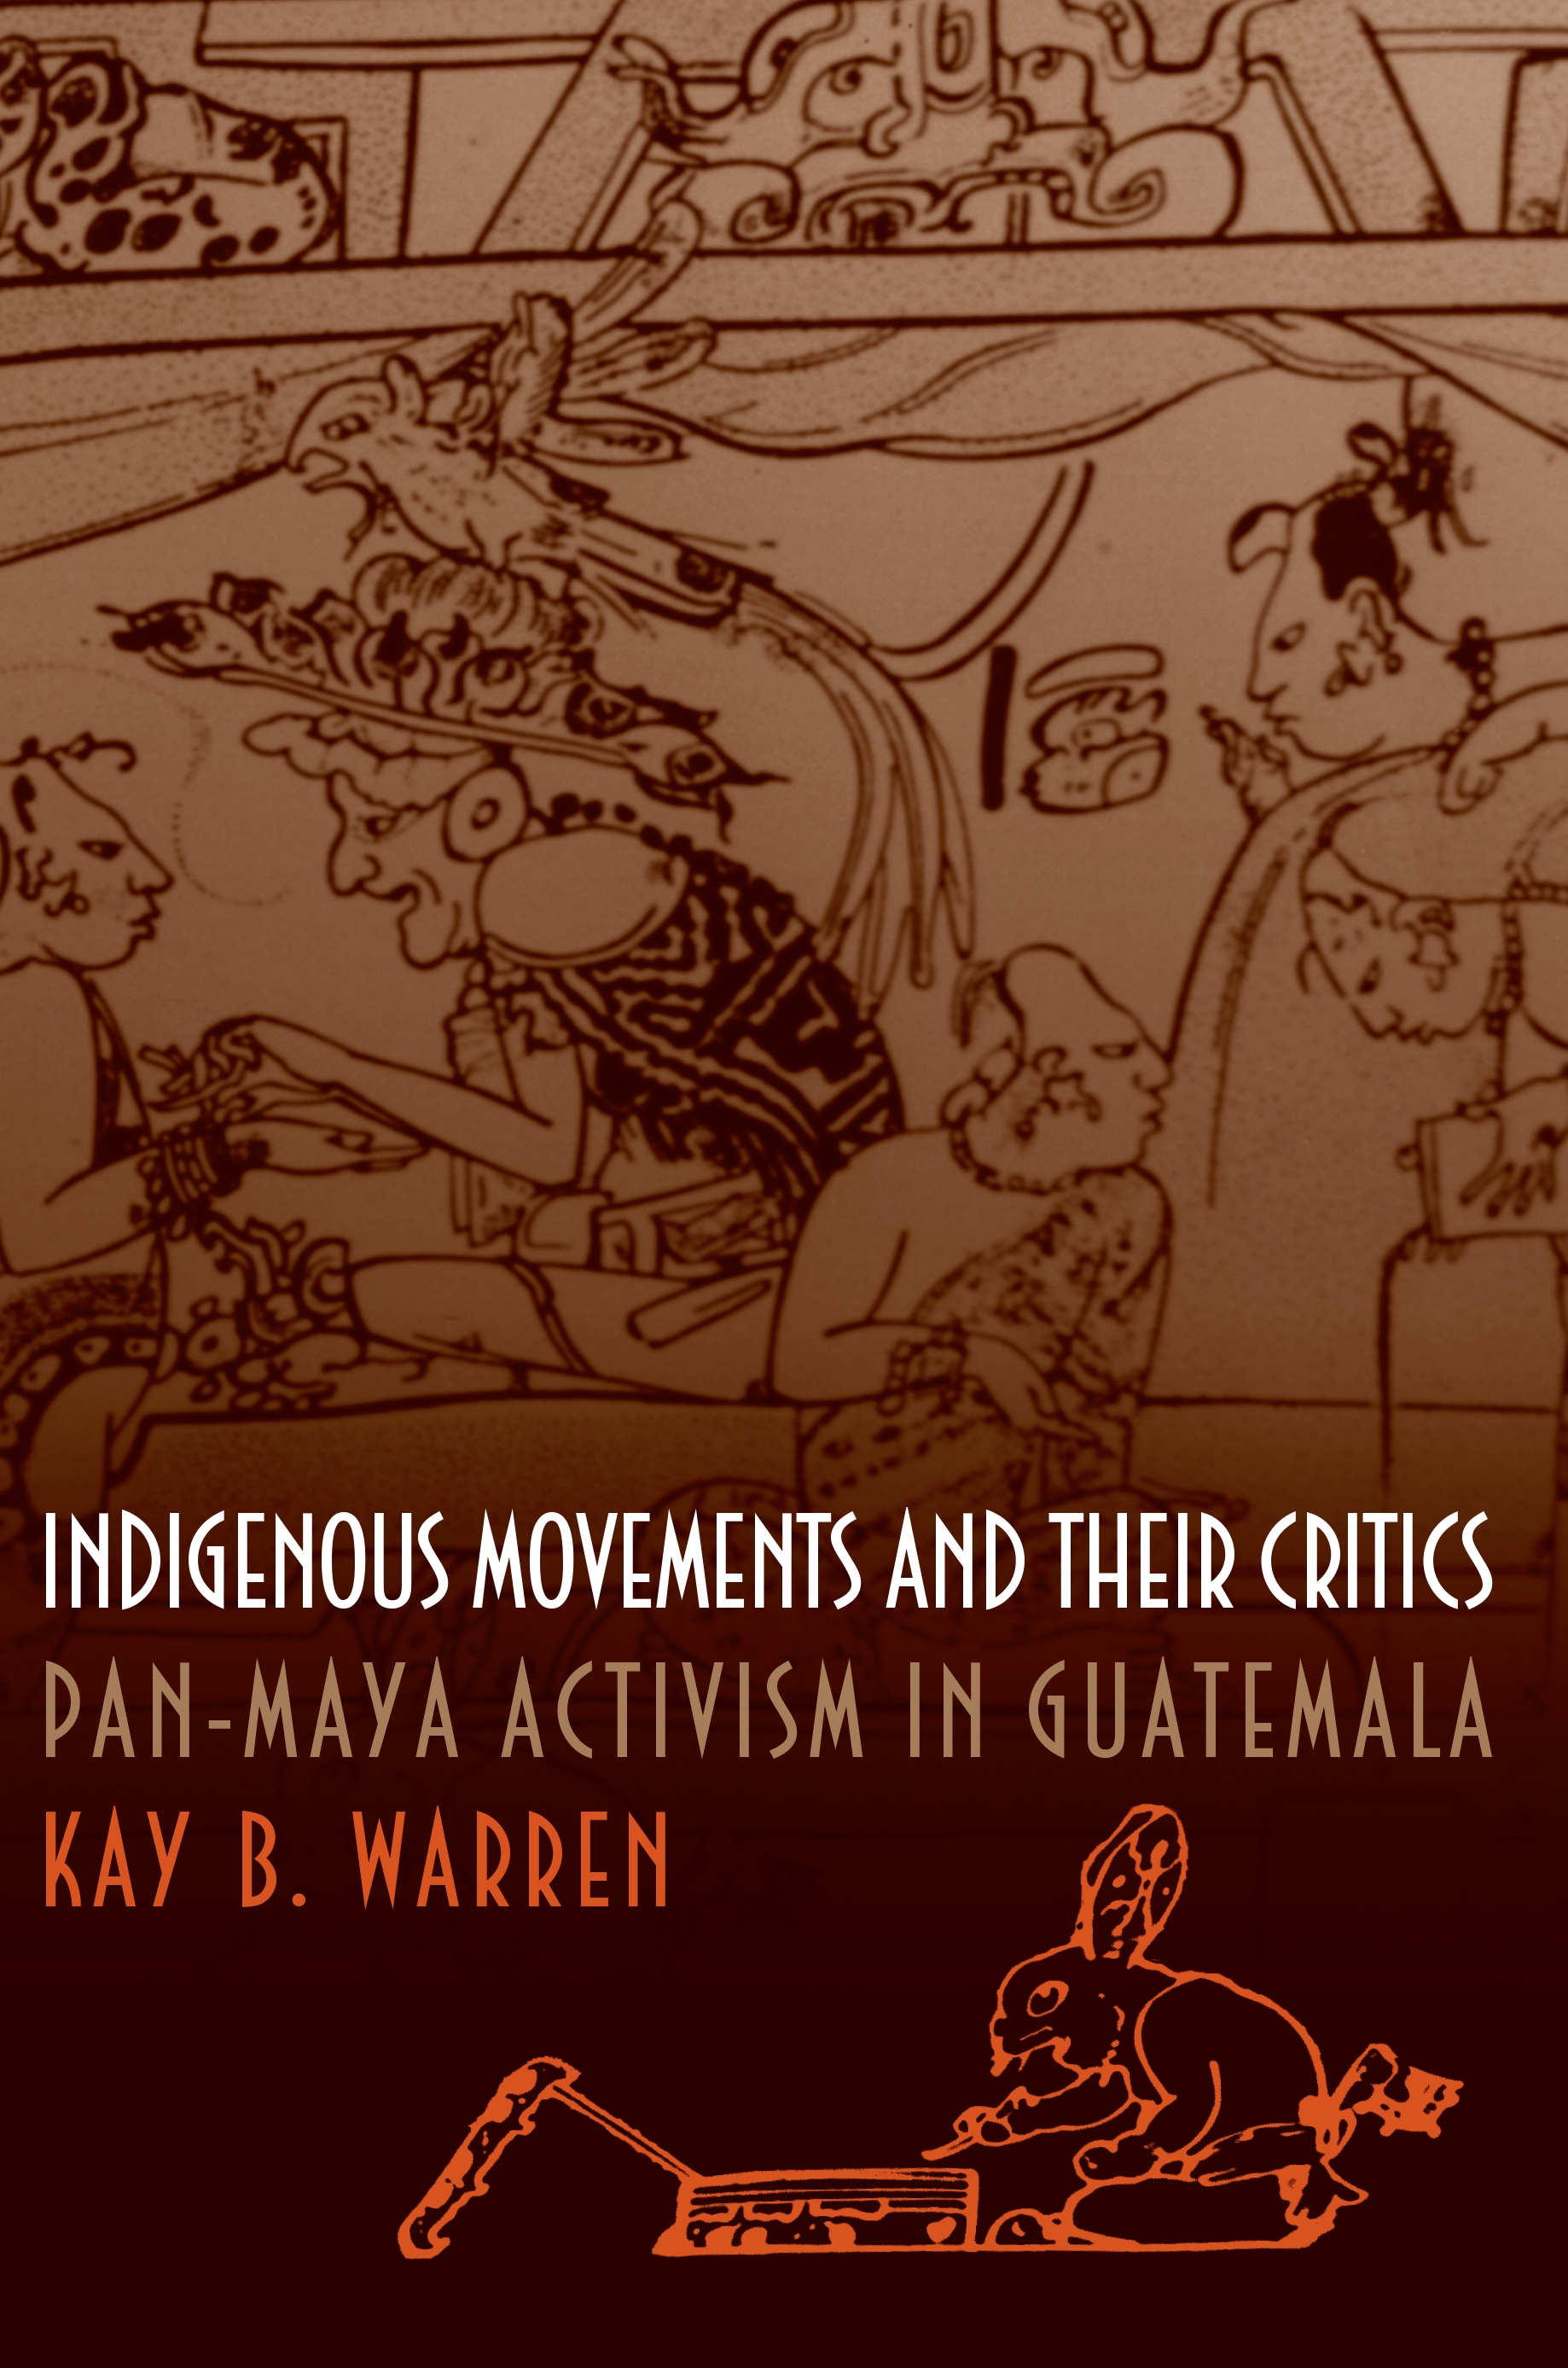 Book Review…The genius of poetic activism - Kaieteur News